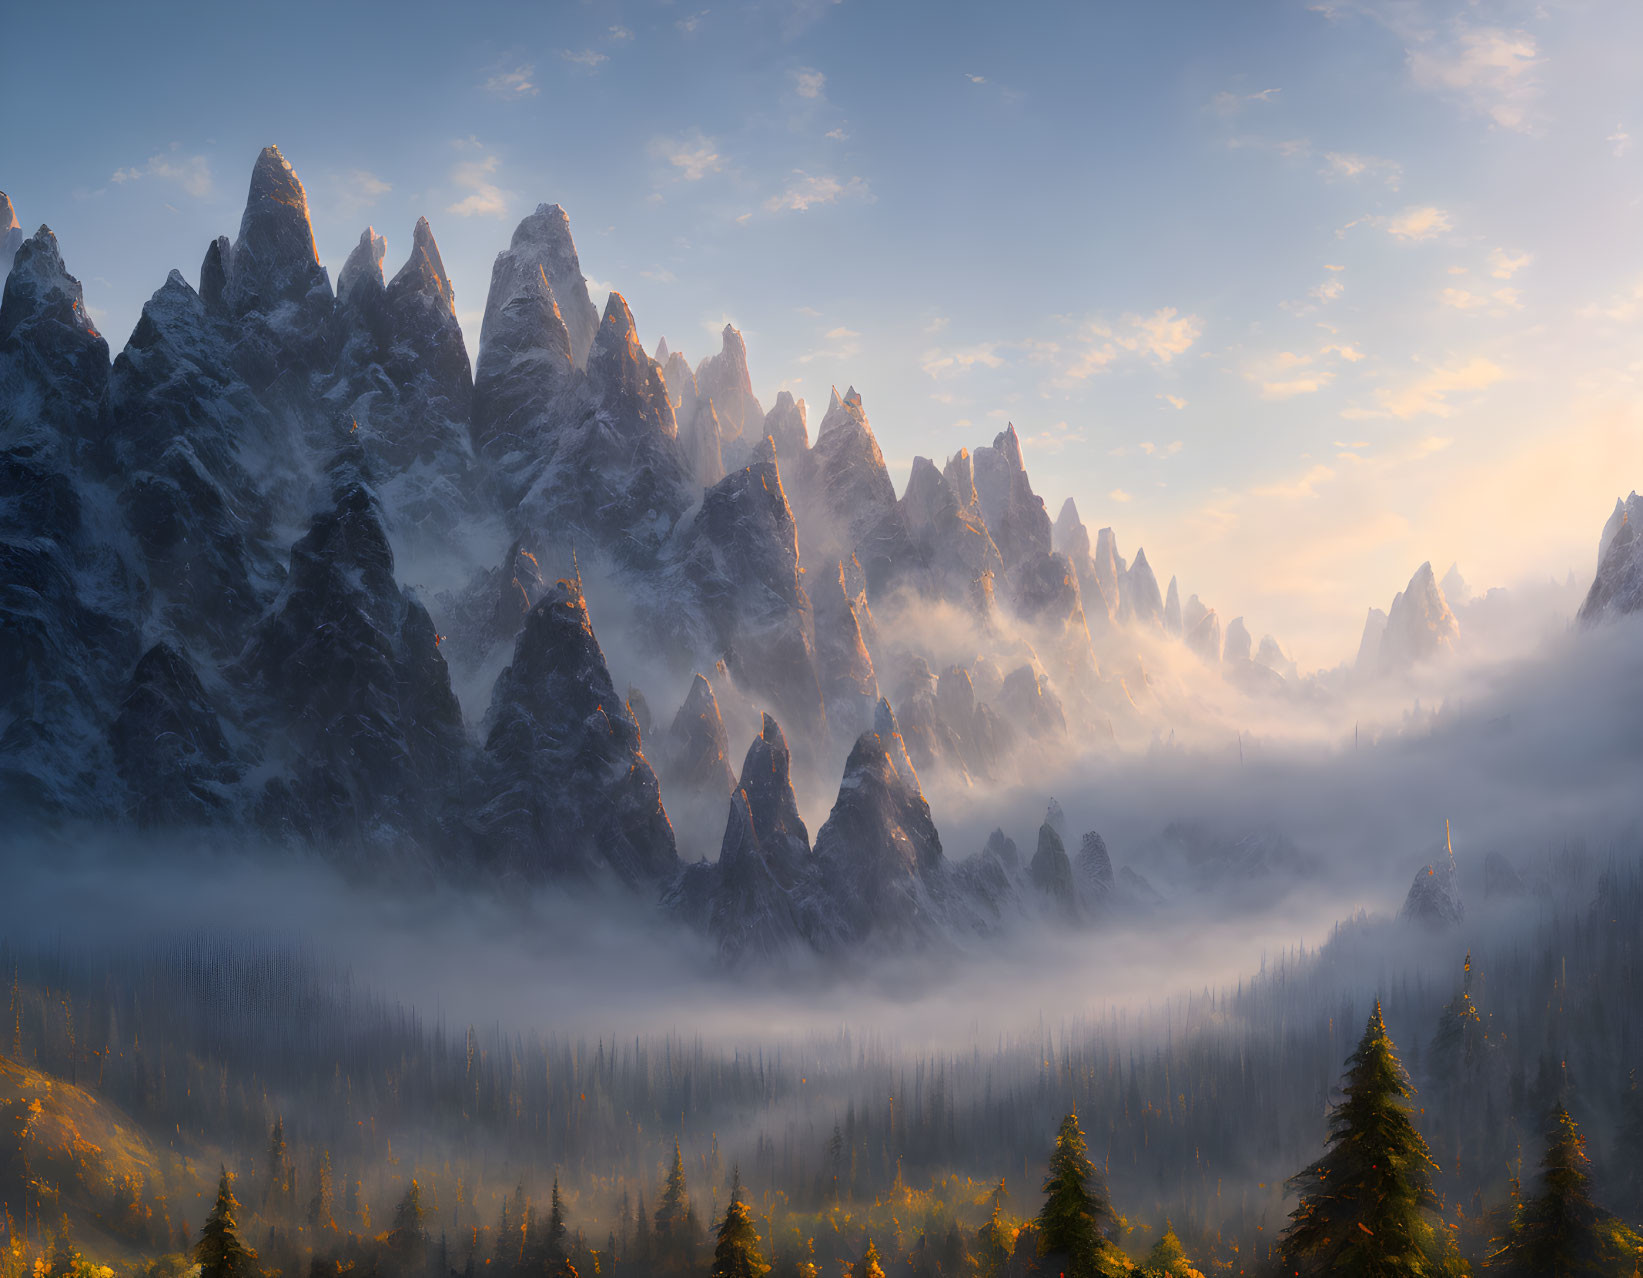 Majestic mountain range with sharp peaks in golden sunrise mist.